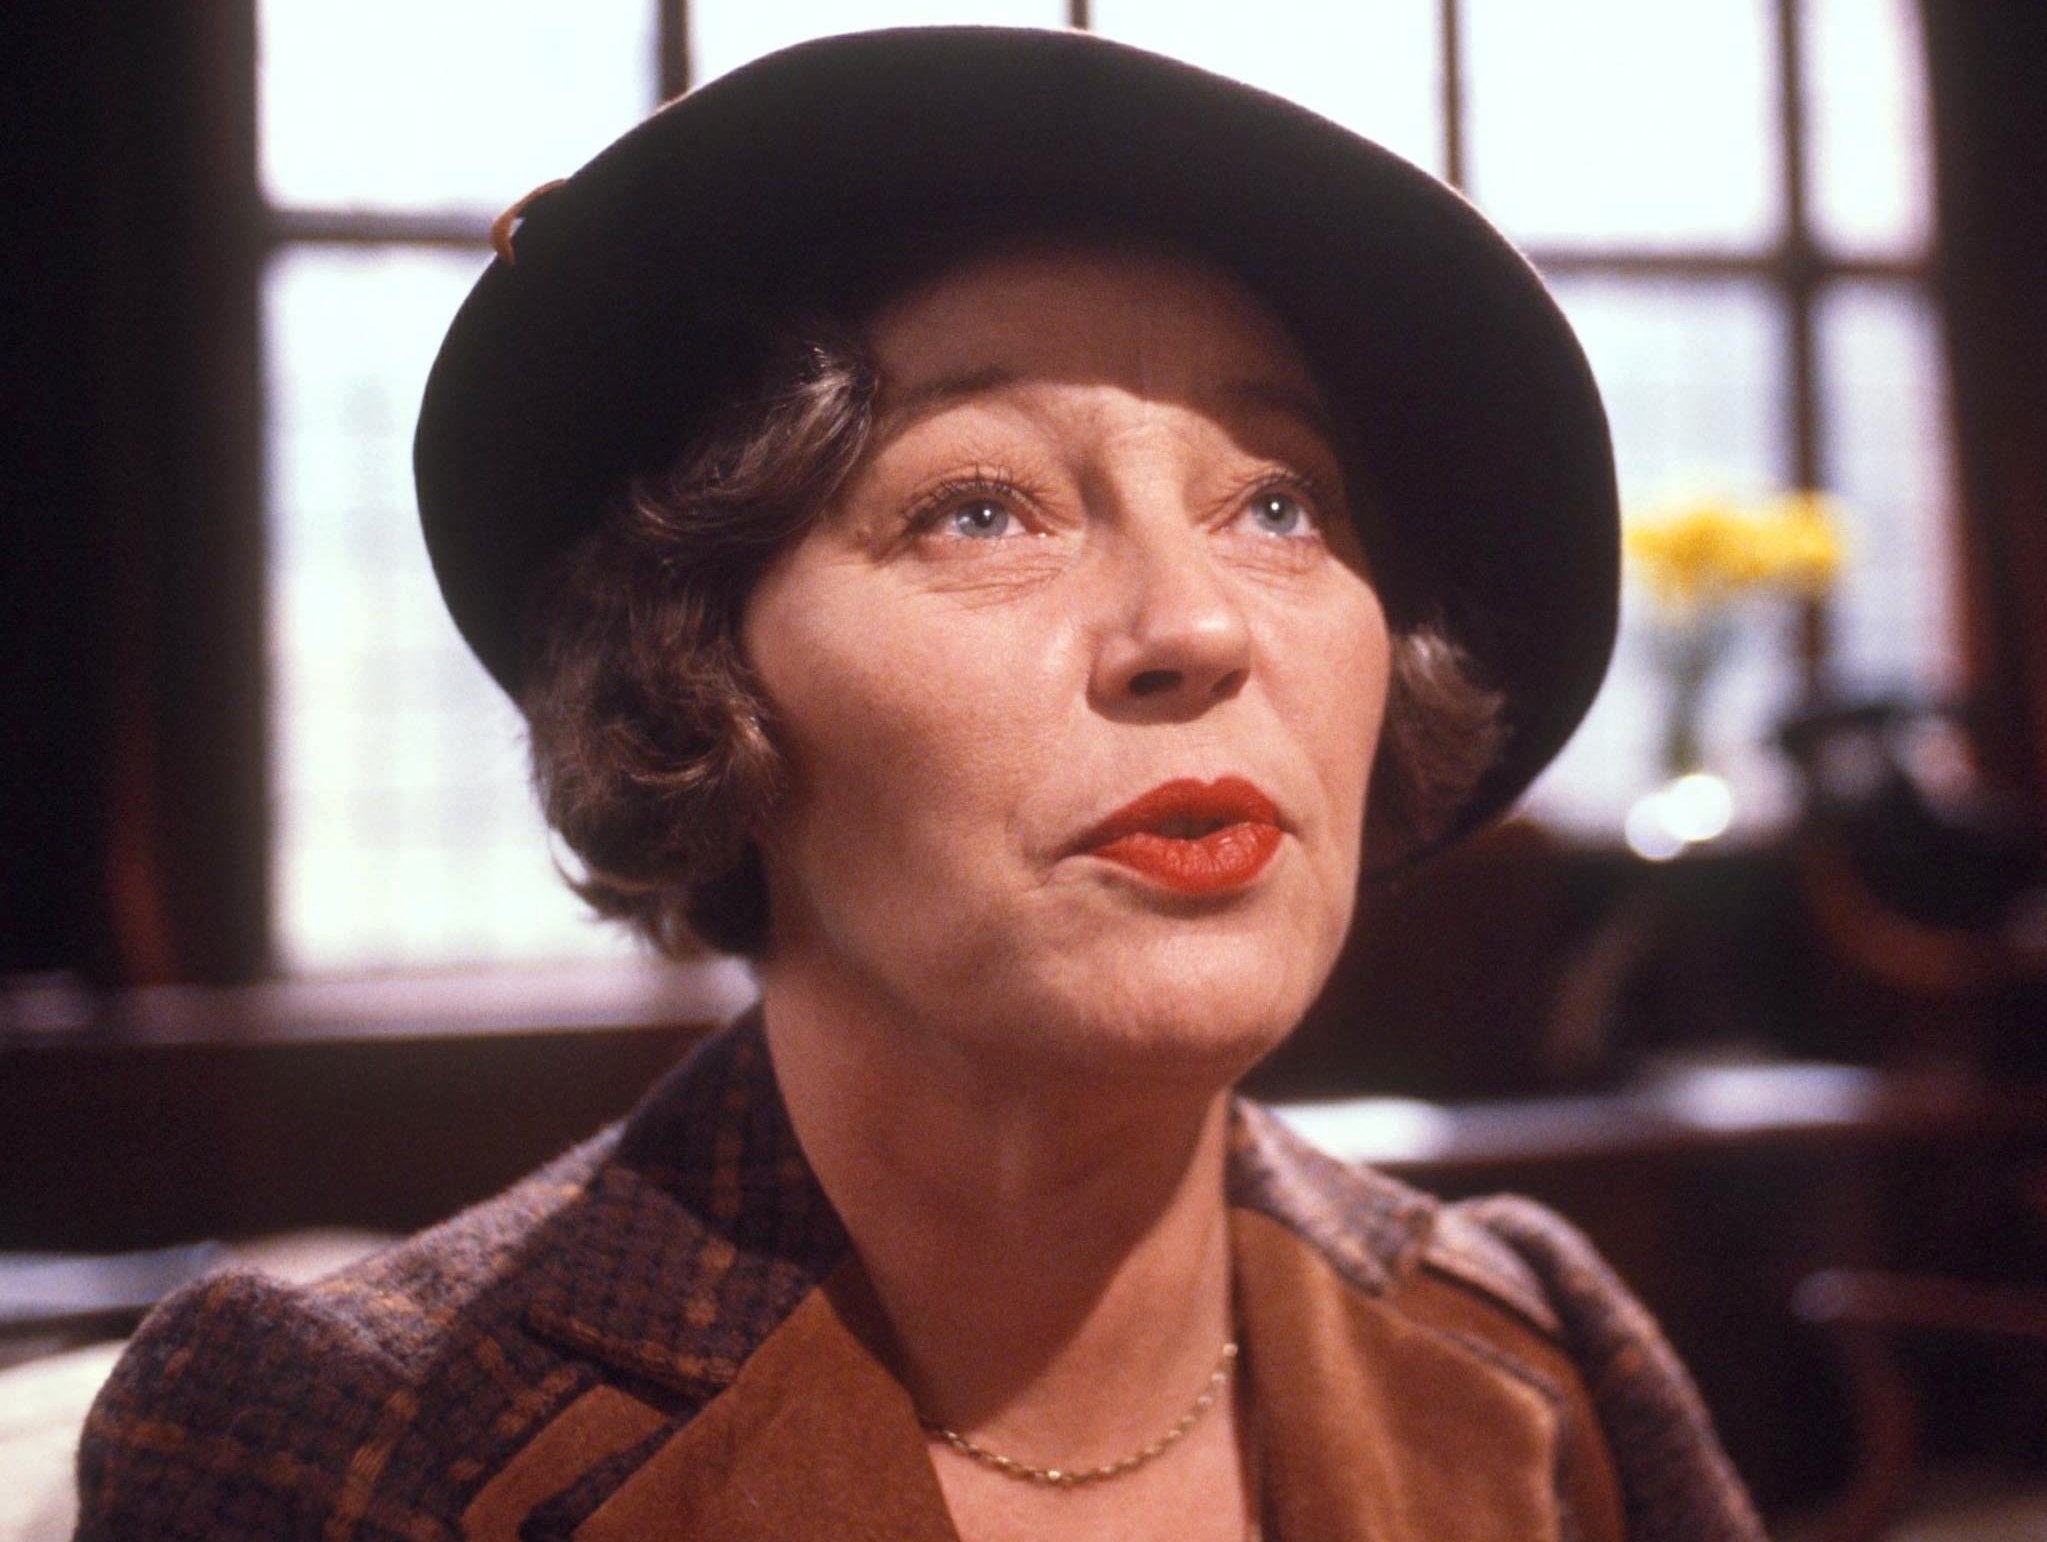 Rosemary Leach stars in "The Charmer", 1986